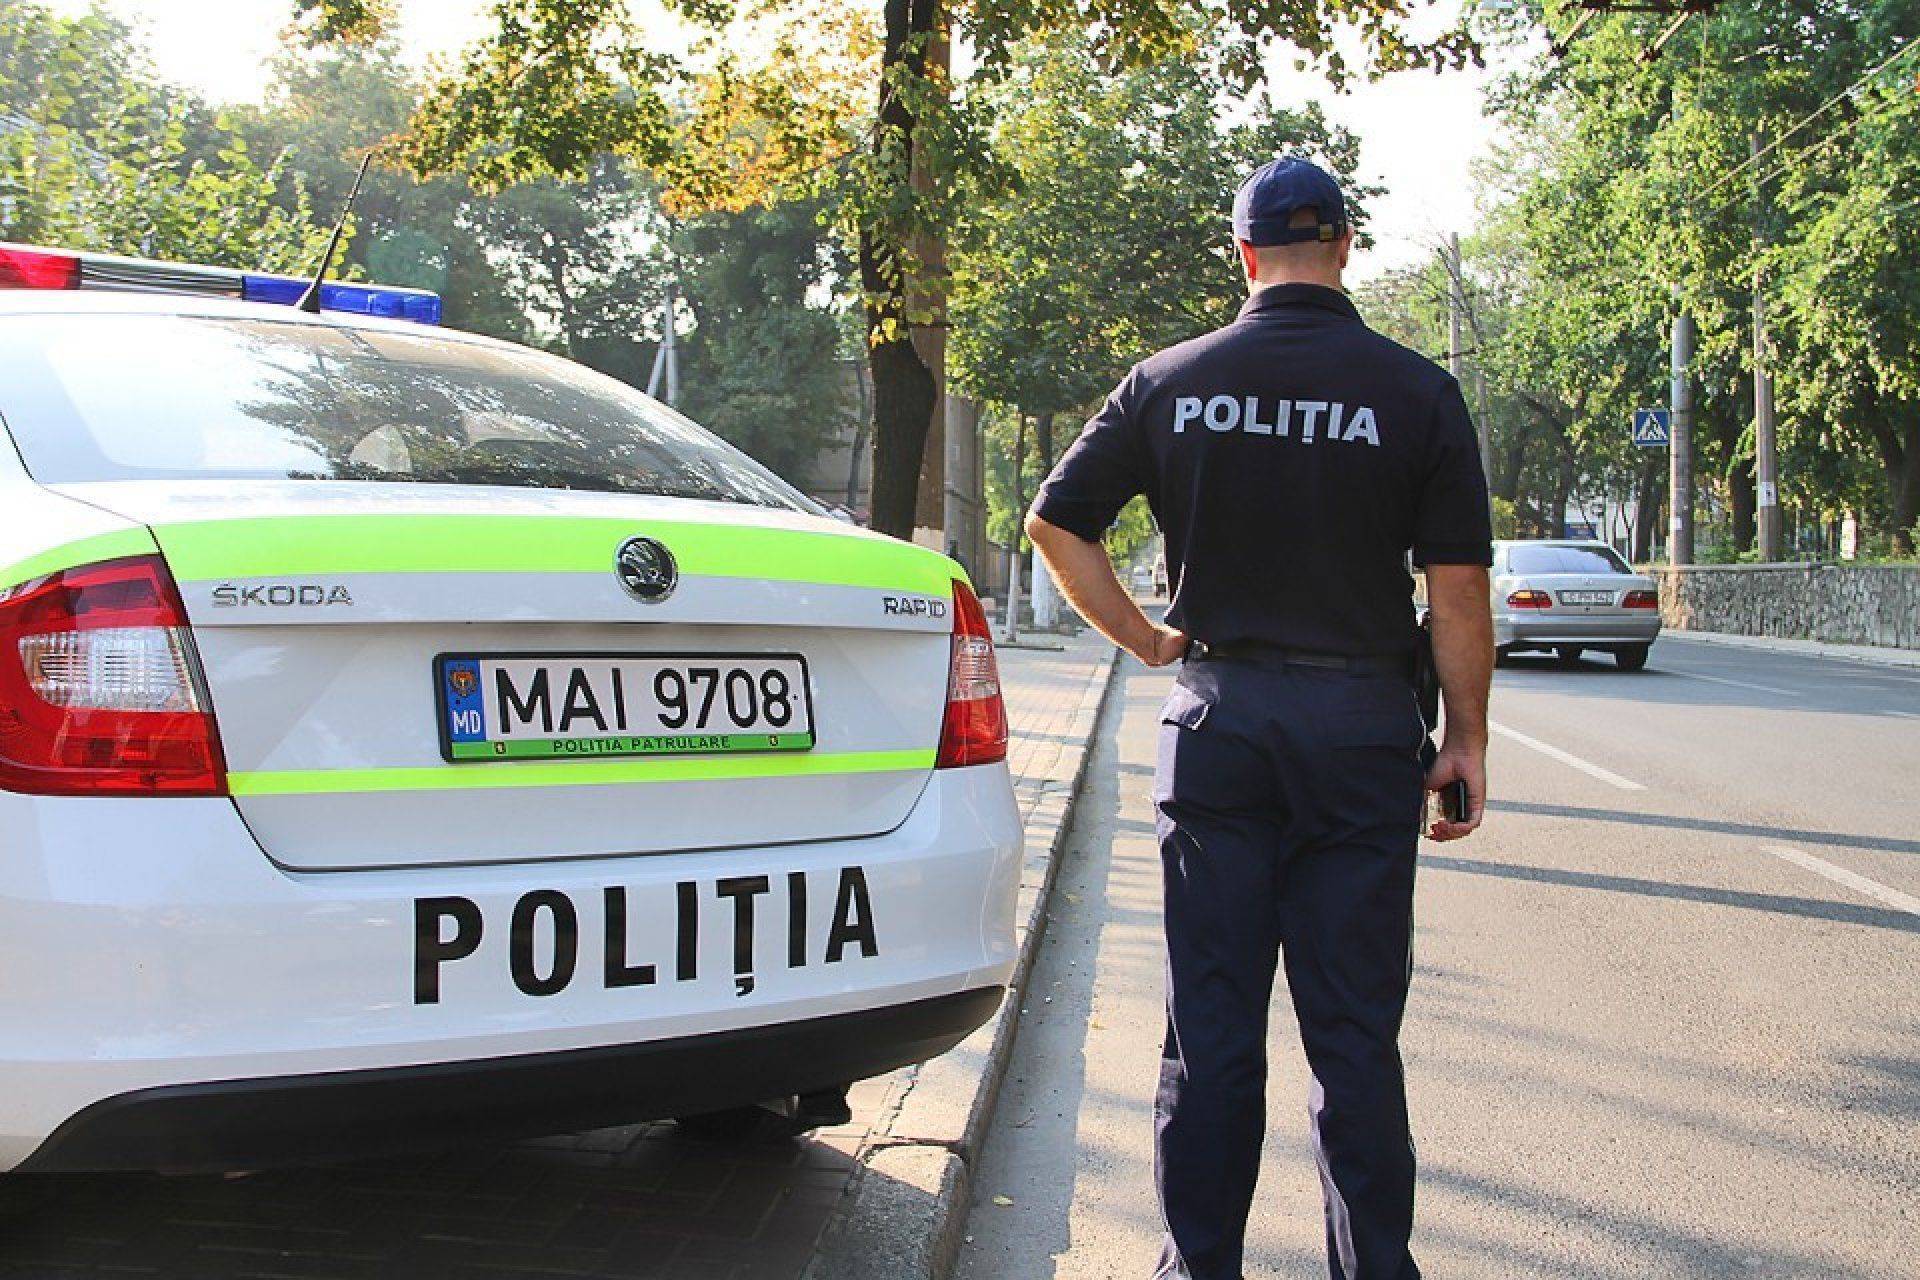 Кишинев автомобиле. Полиция Молдавии. Полиция Молдавии машины. Молдавская полиция машина. Полиция Молдовы форма.